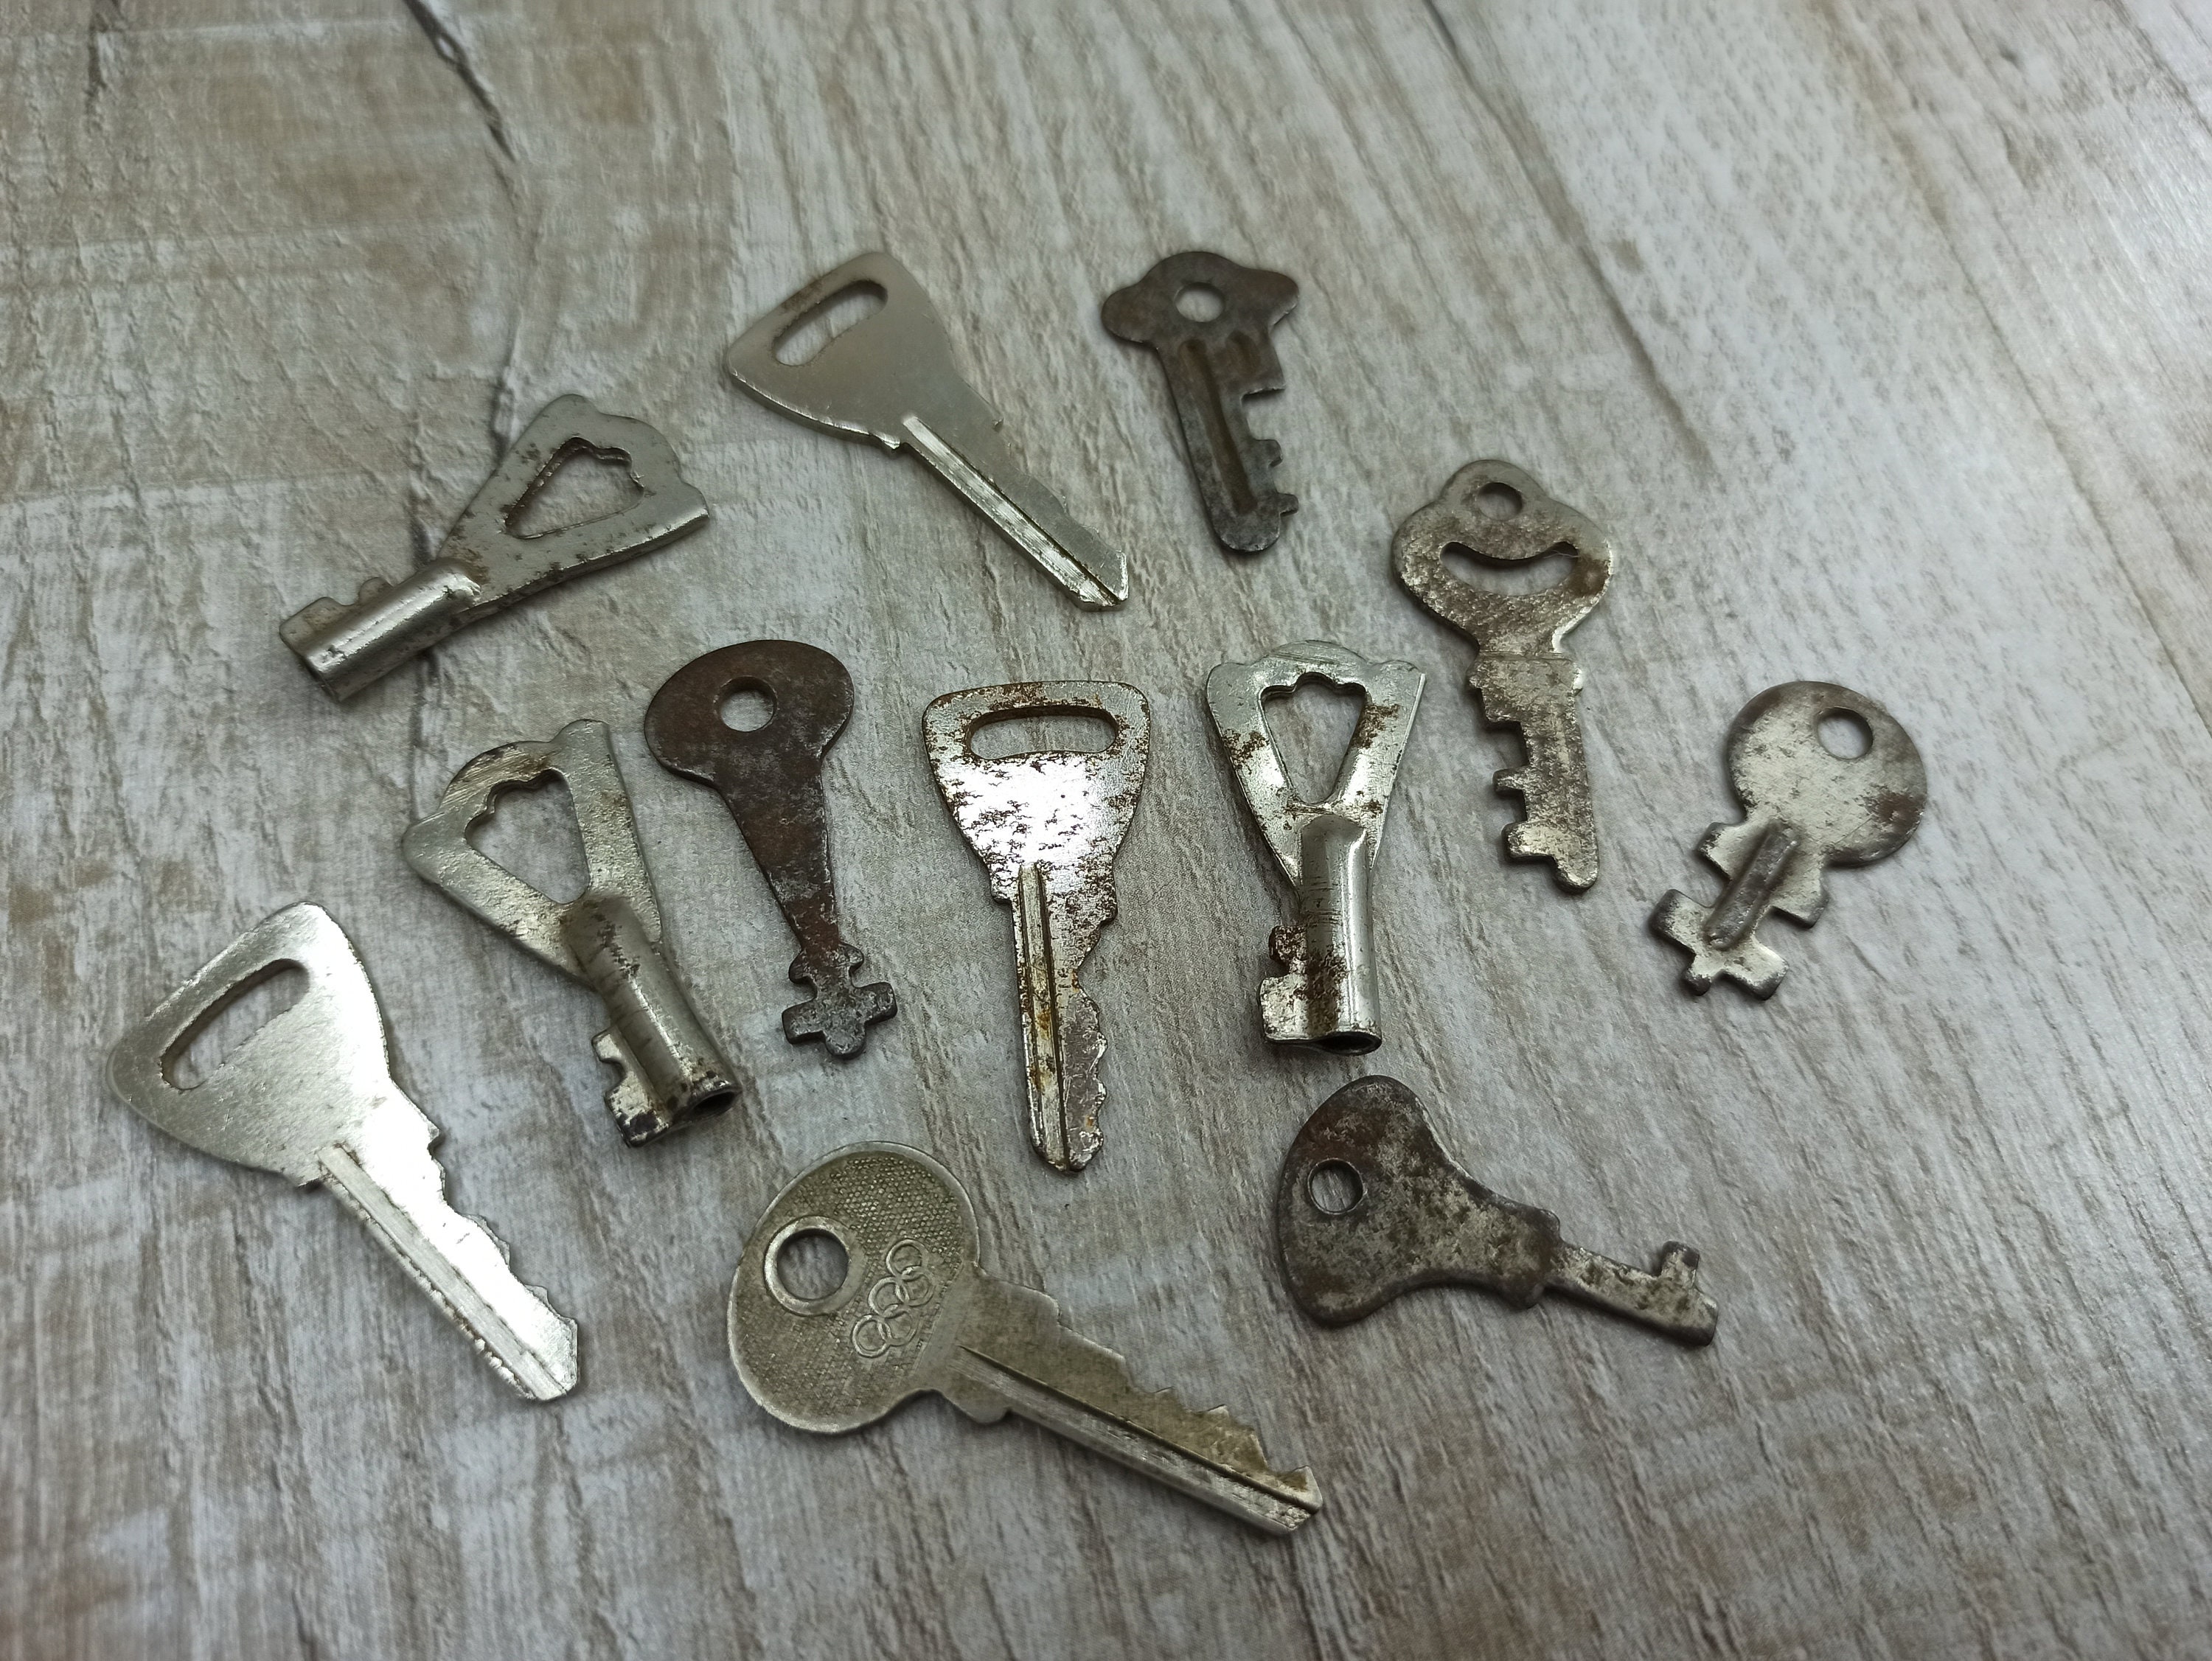 Vintage Keys Lot 6 Pcs. Wholesale Antique Keys for Craft and Decor. Old  Skeleton Keys. Soviet Flat Keys. Russian Metal Keys USSR Original 